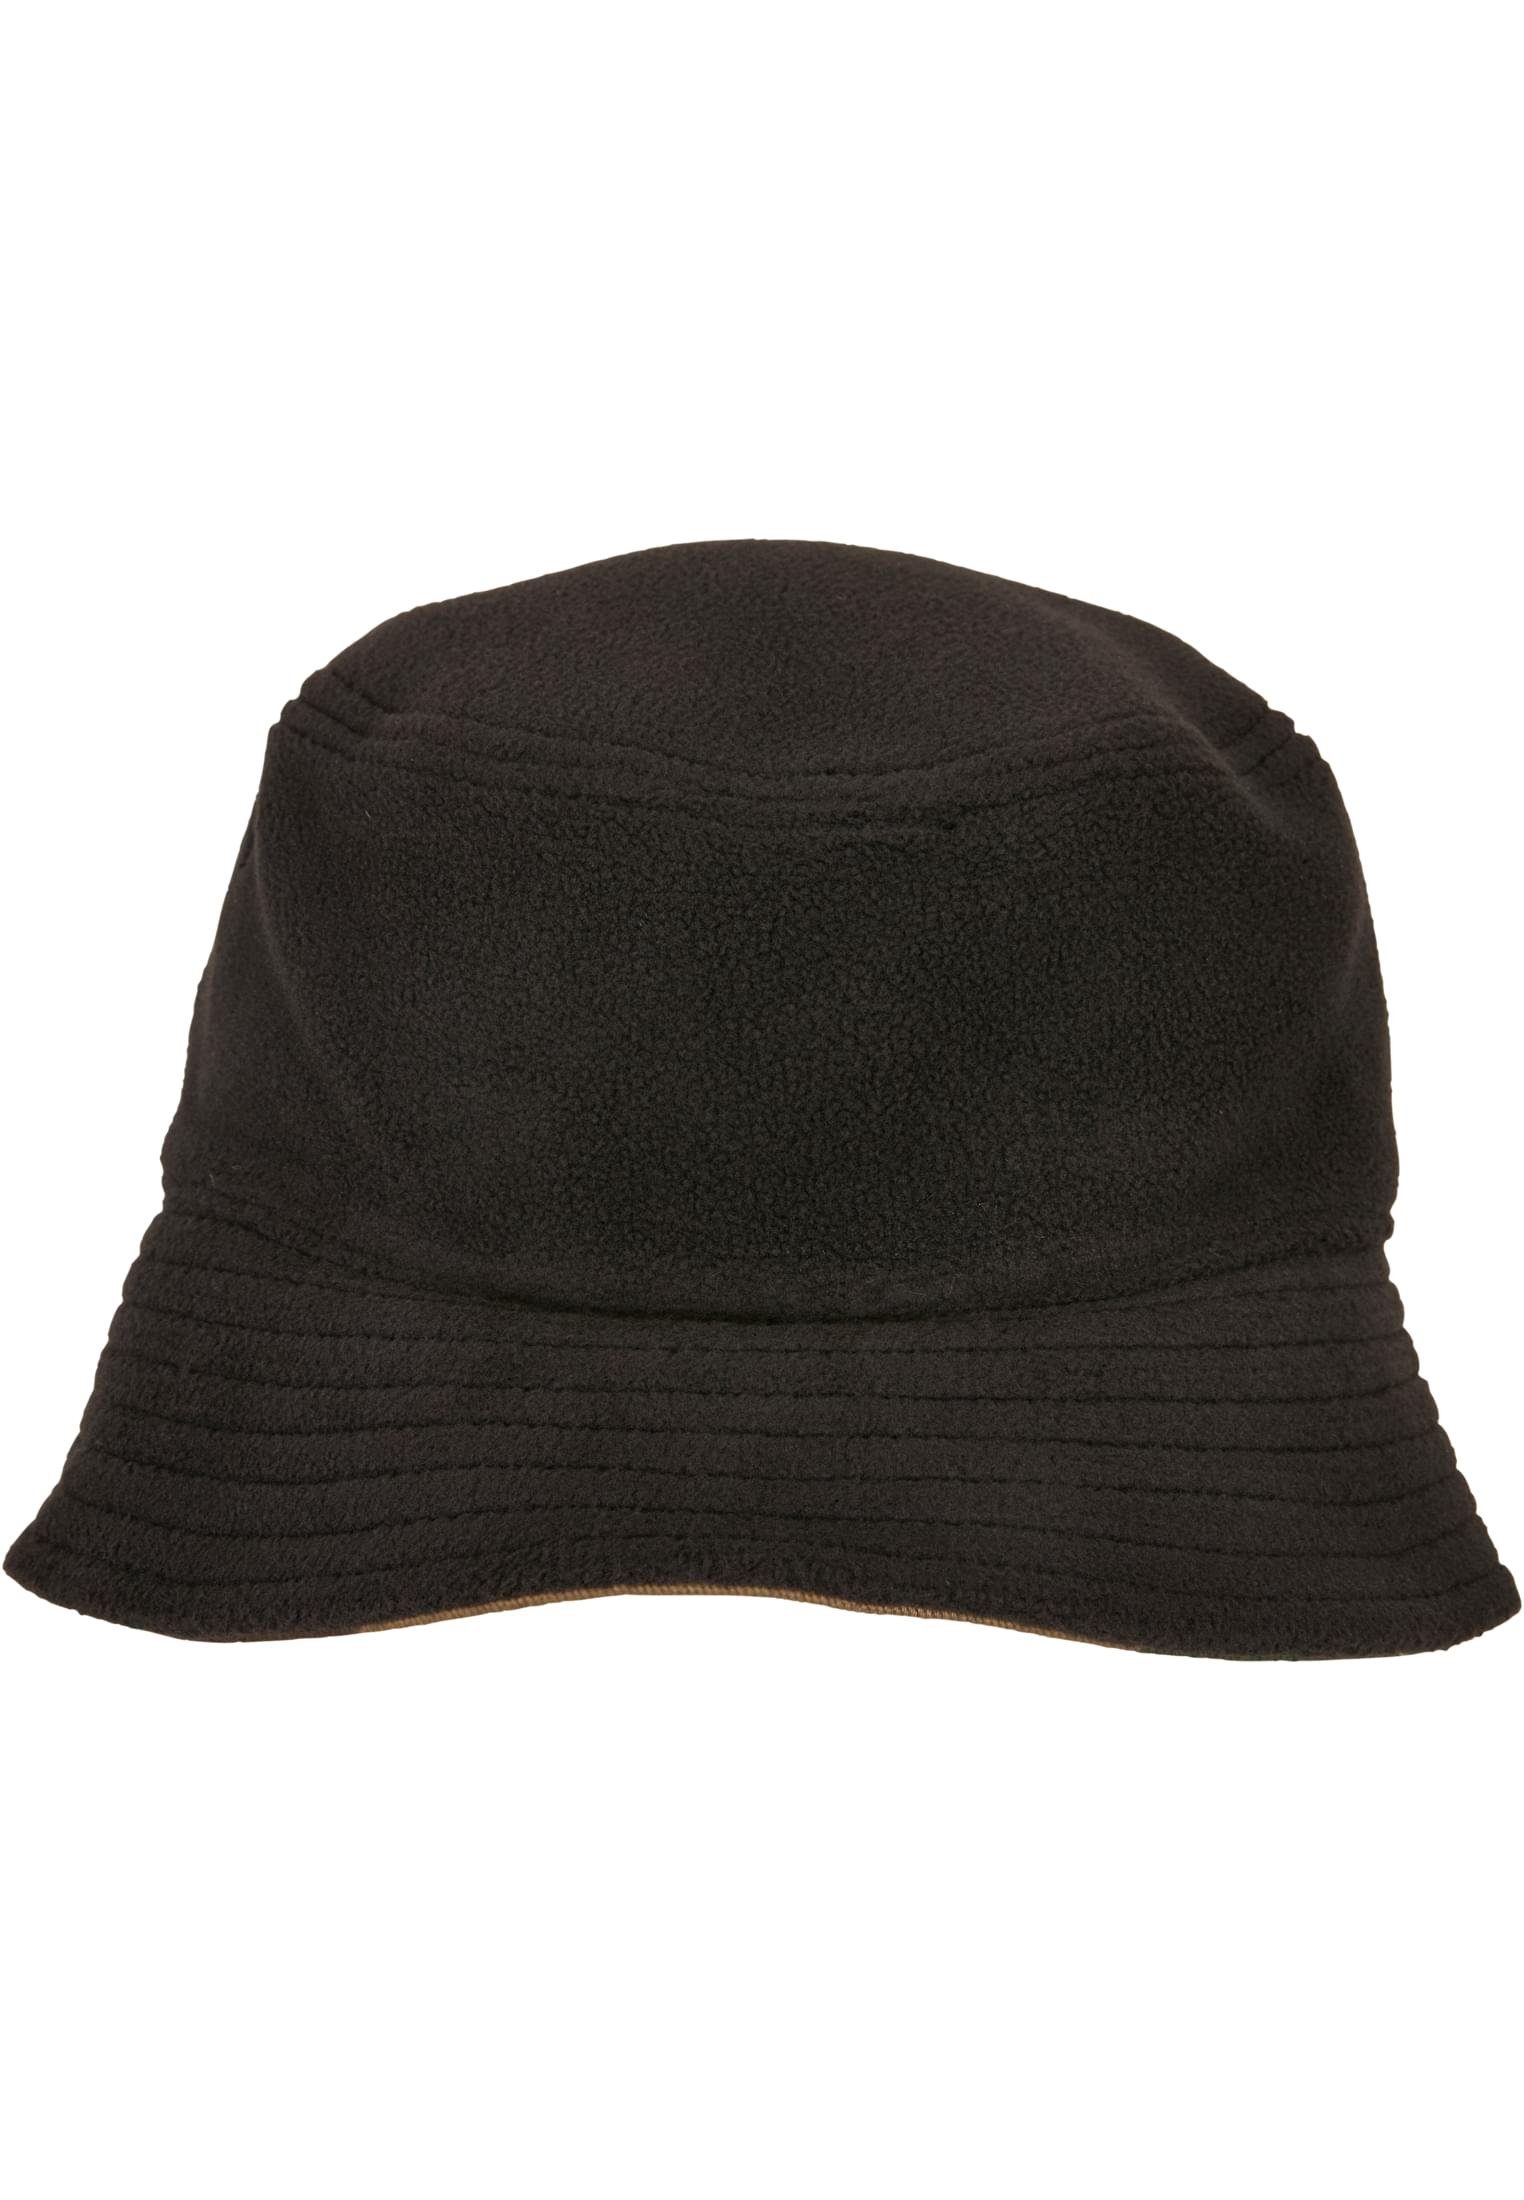 SONS Flex Hat, CAYLER Qualitativ Knock Cap Accessoires & Verarbeitung Hustle the Bucket hohe